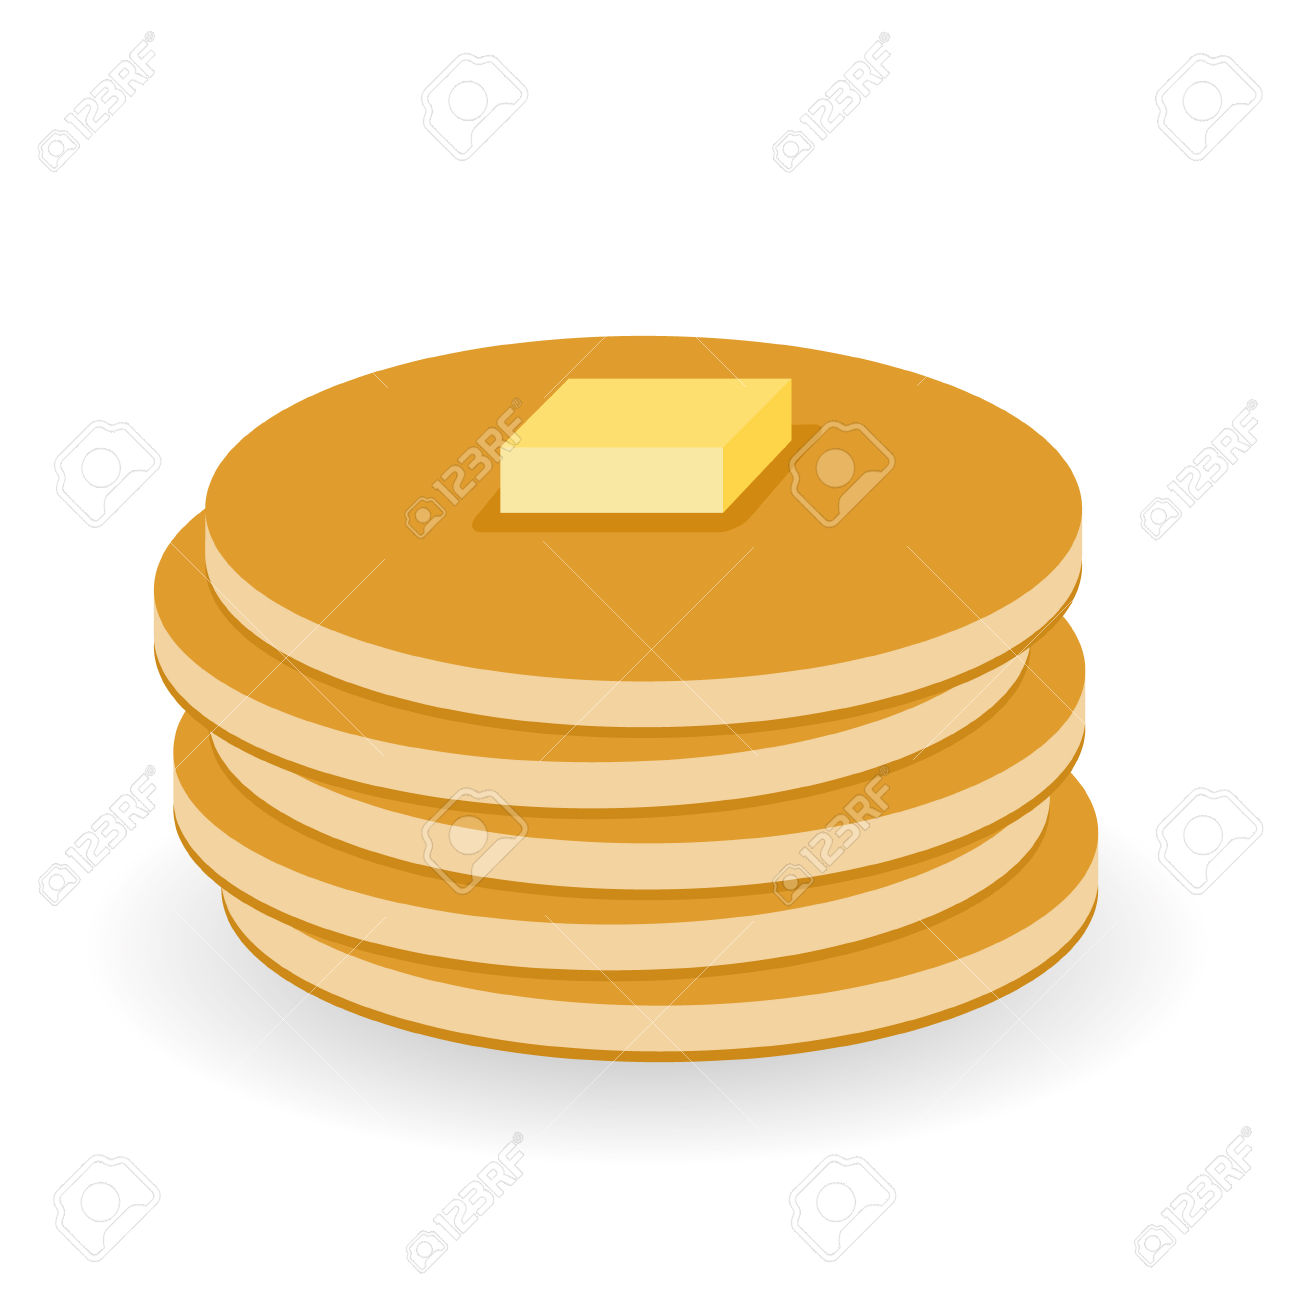 Pancakes Clip Art Royalty Fre